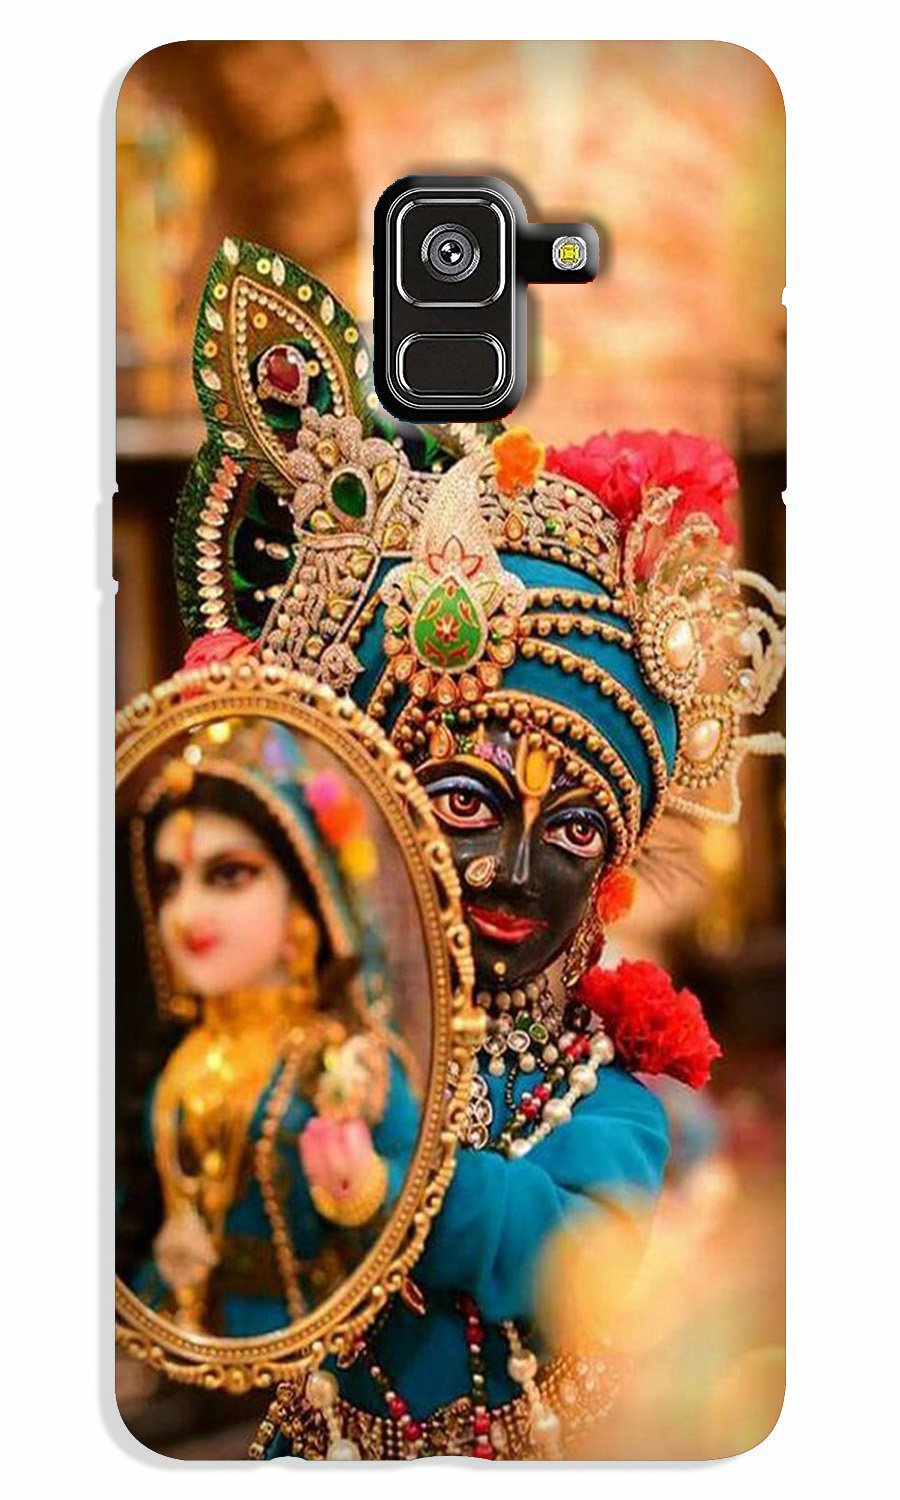 Lord Krishna5 Case for Galaxy A8 Plus